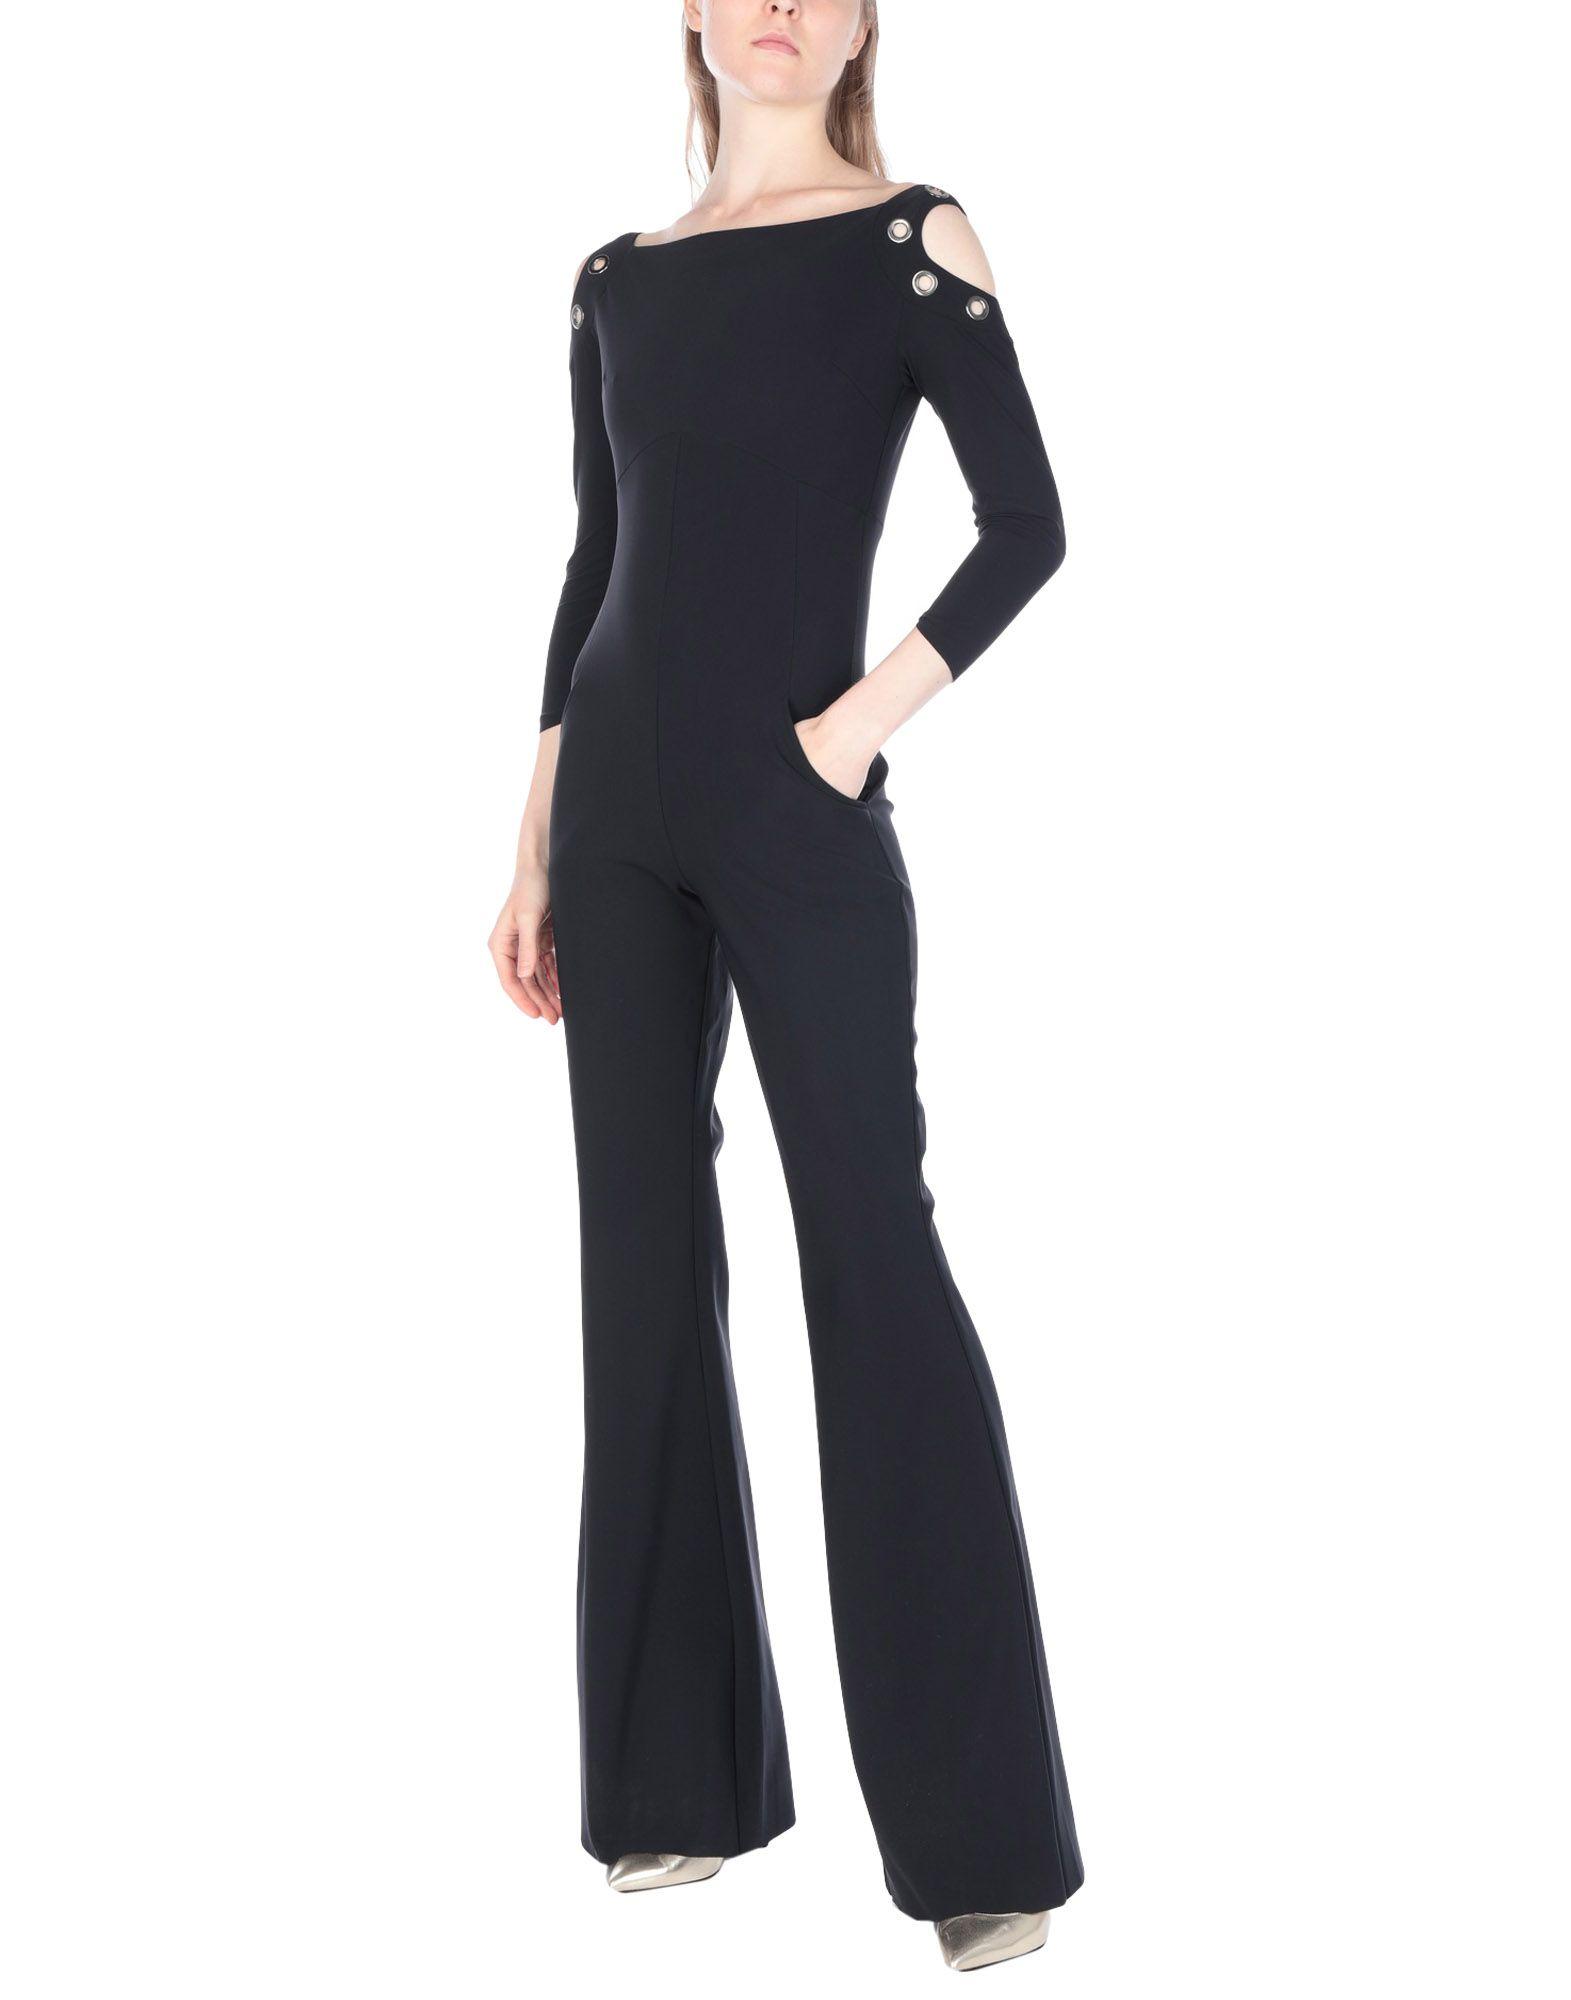 Chiara Boni Synthetic Jumpsuit in Black - Lyst